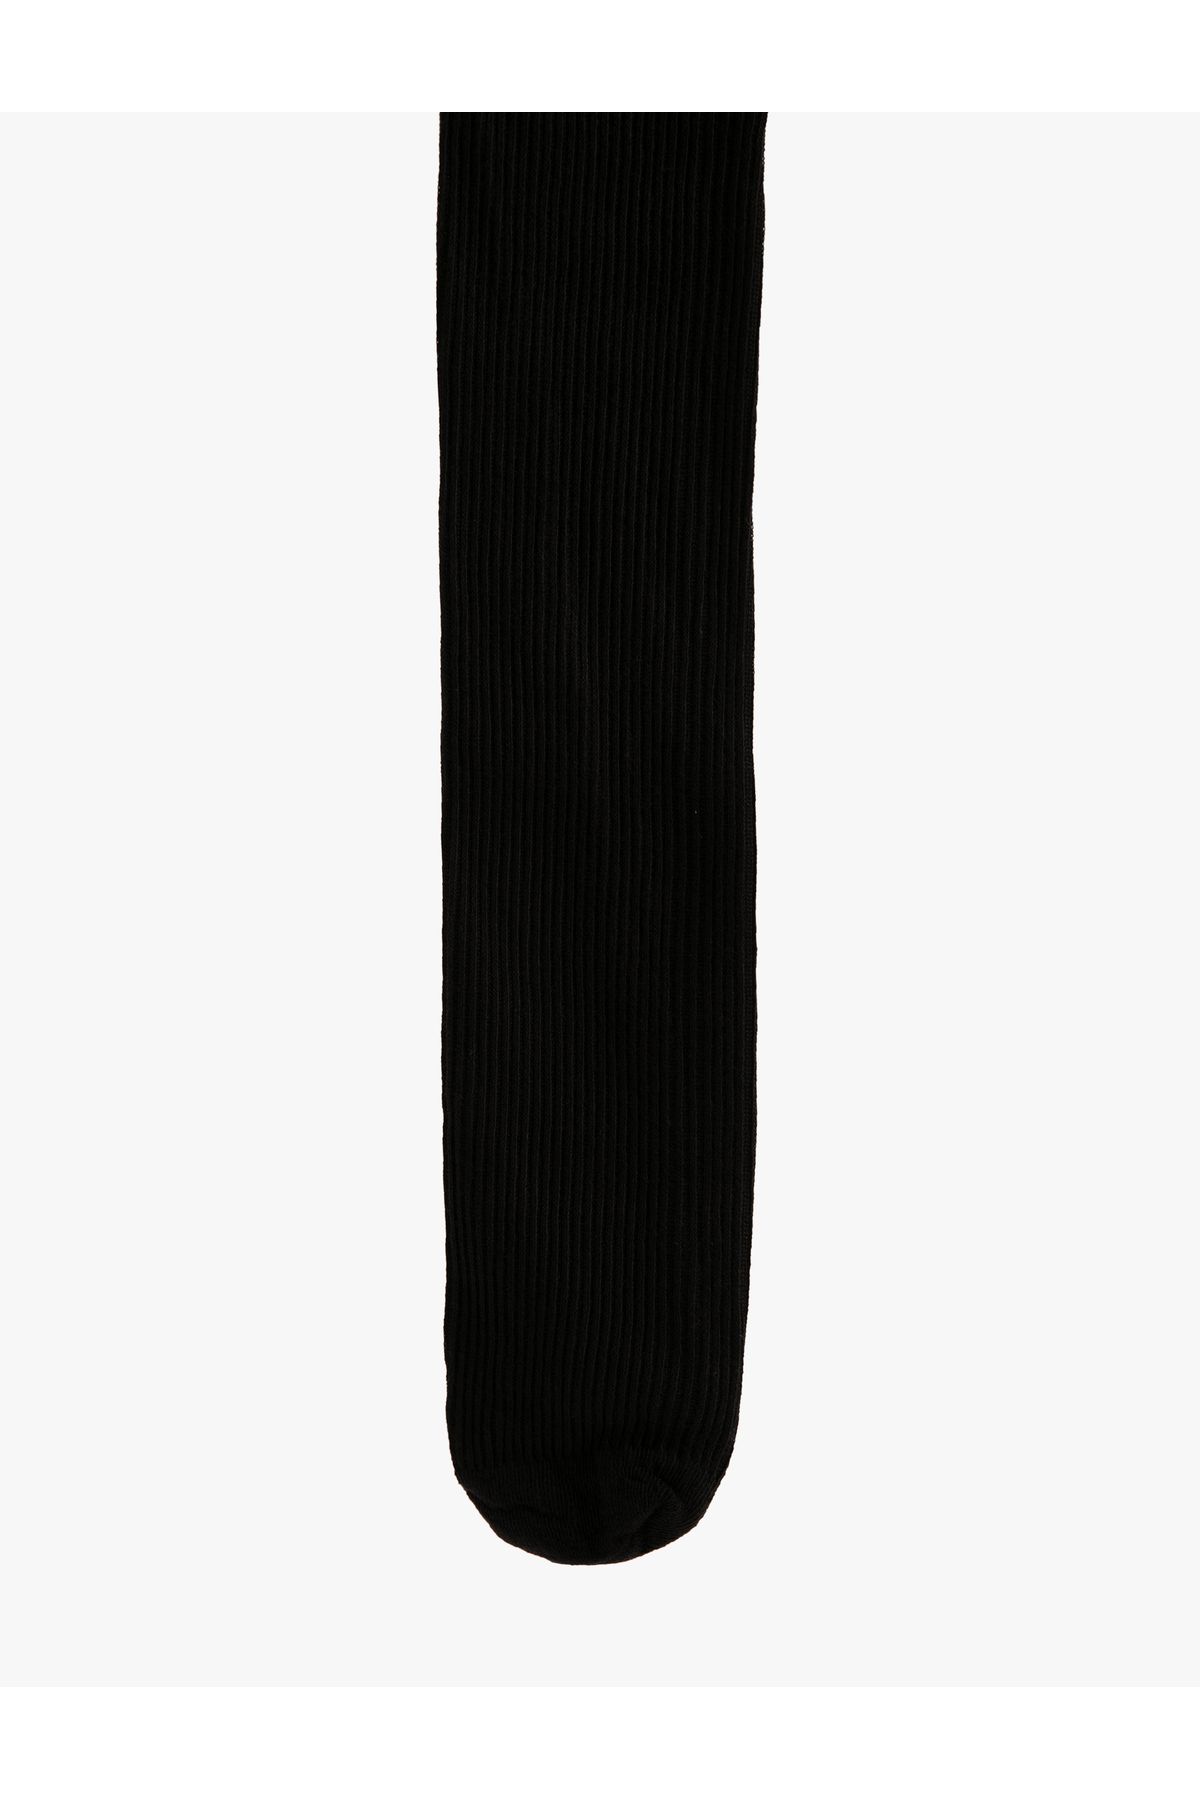 Koton Mat Ribanalı Külotlu Çorap 150 Den